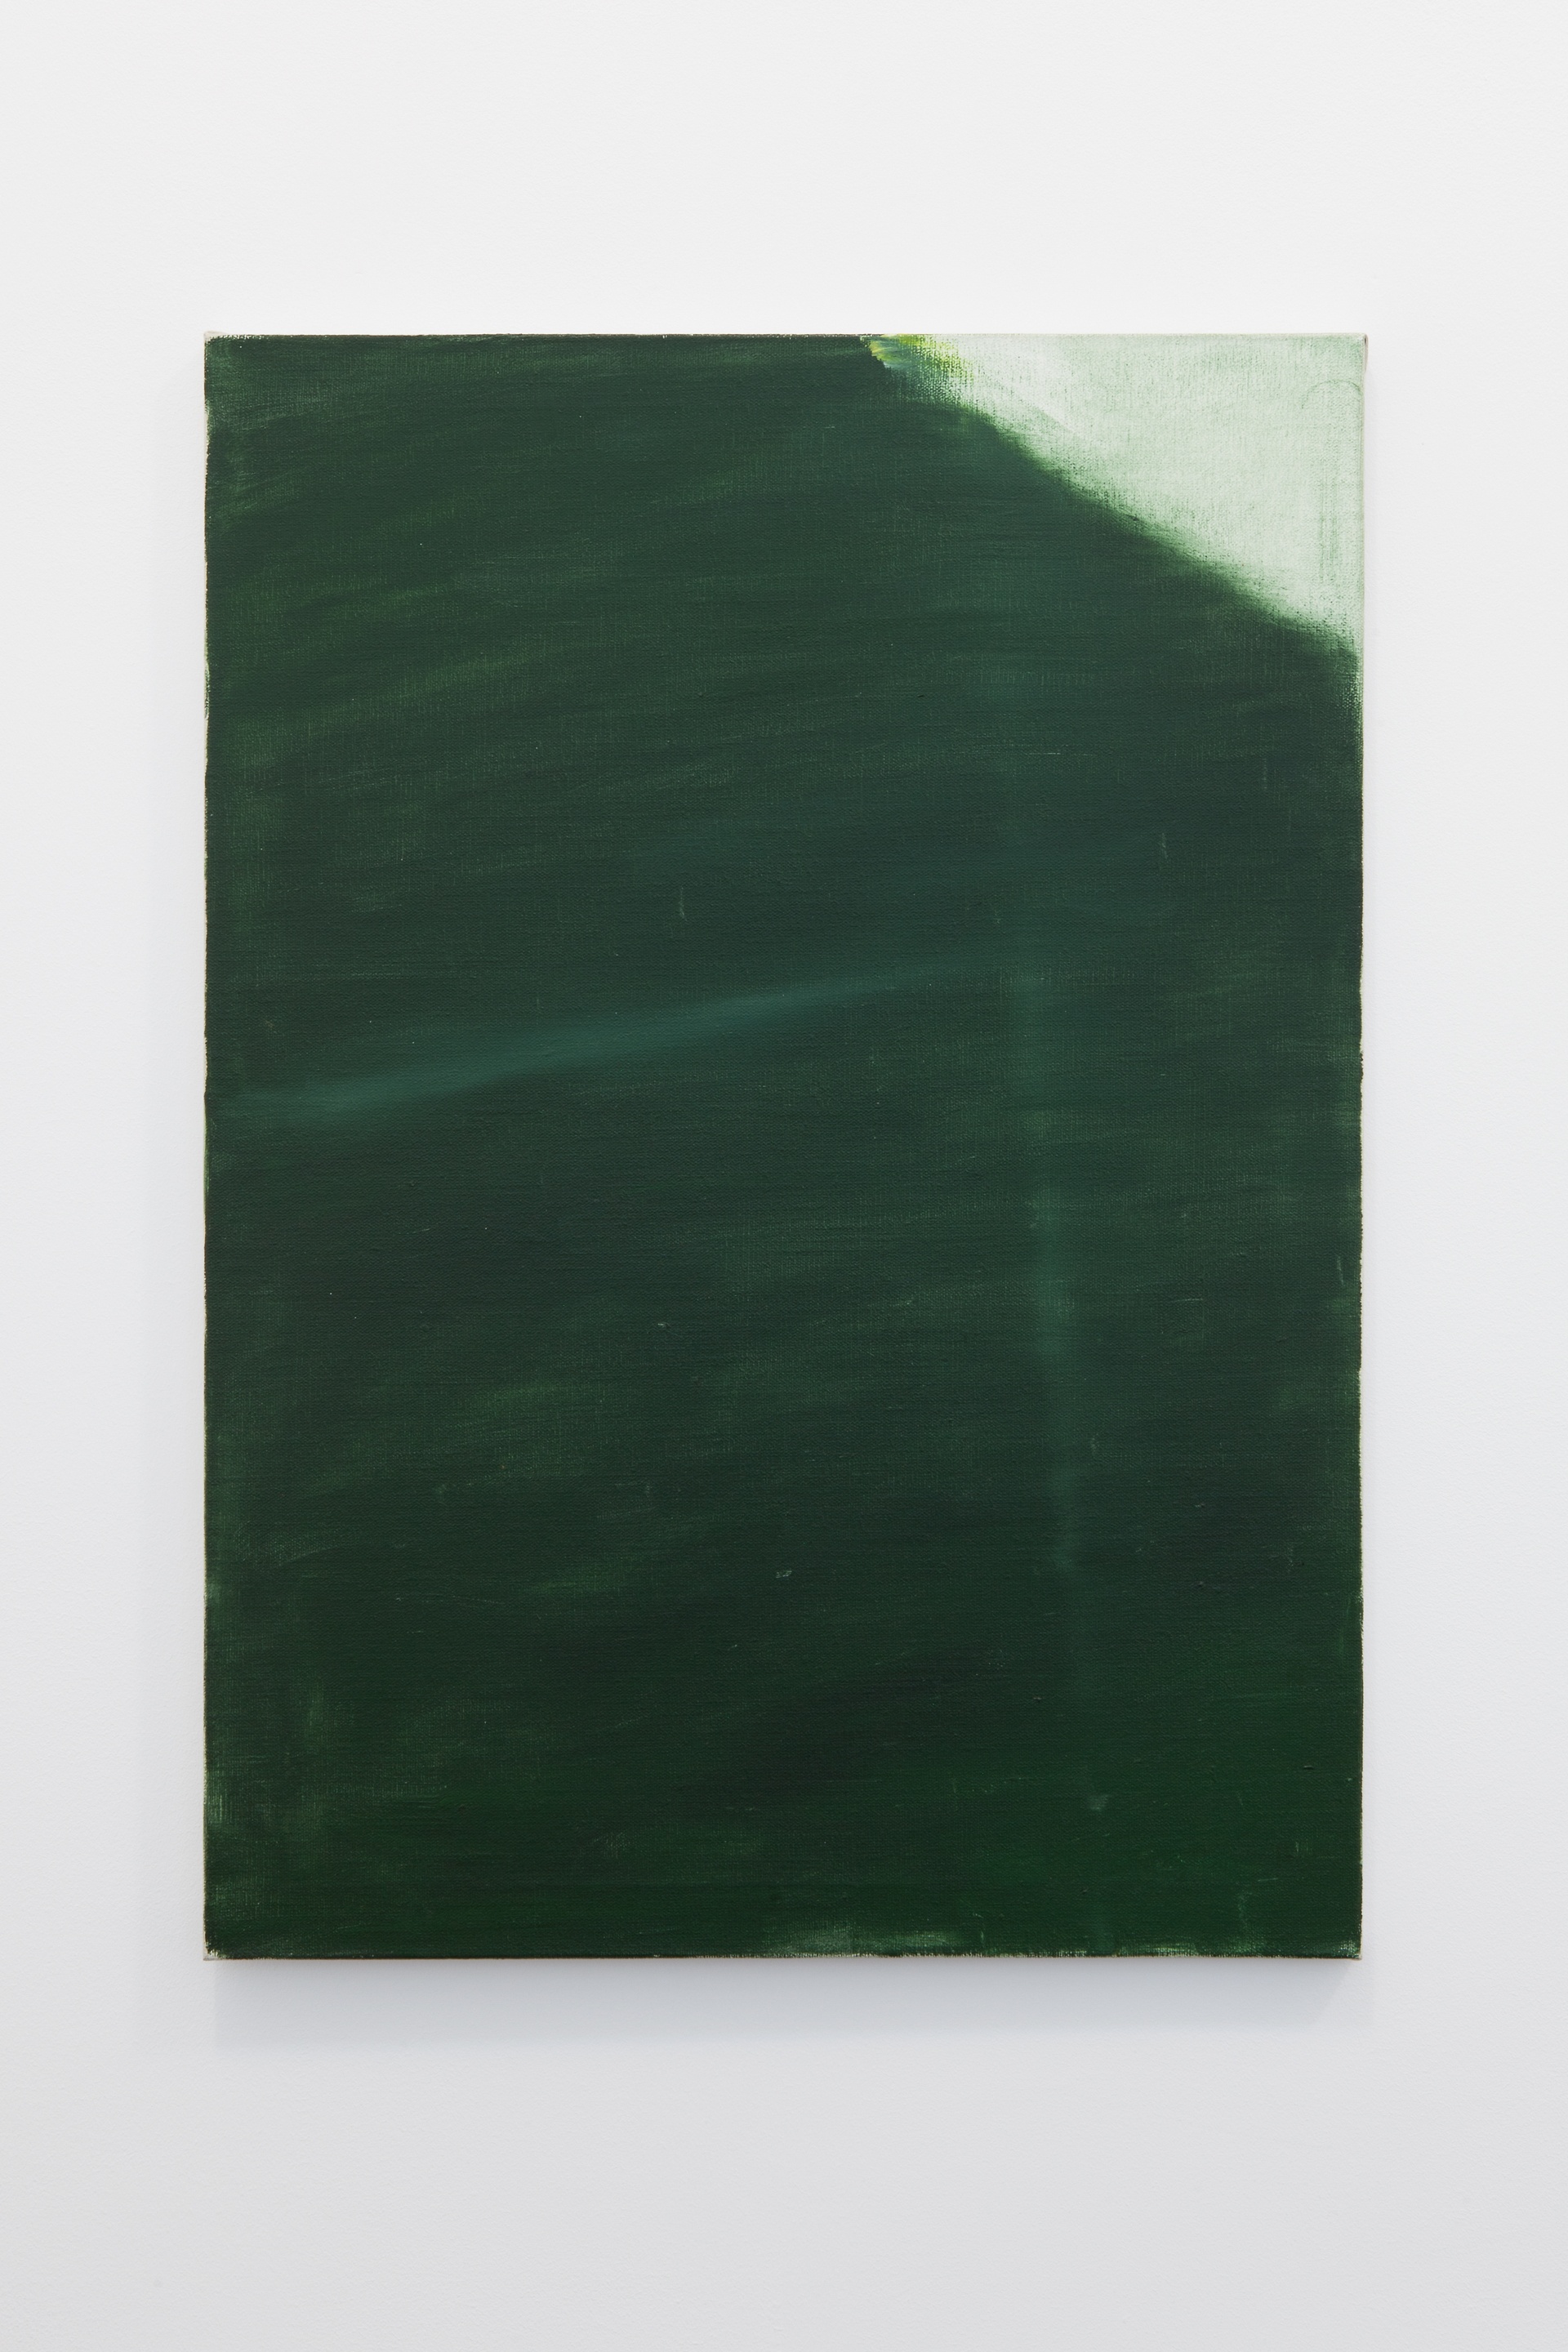 Raoul De KeyserUntitled, 1988oil on canvas70 x 50 cm | 27 1/2 x 19 2/3 in